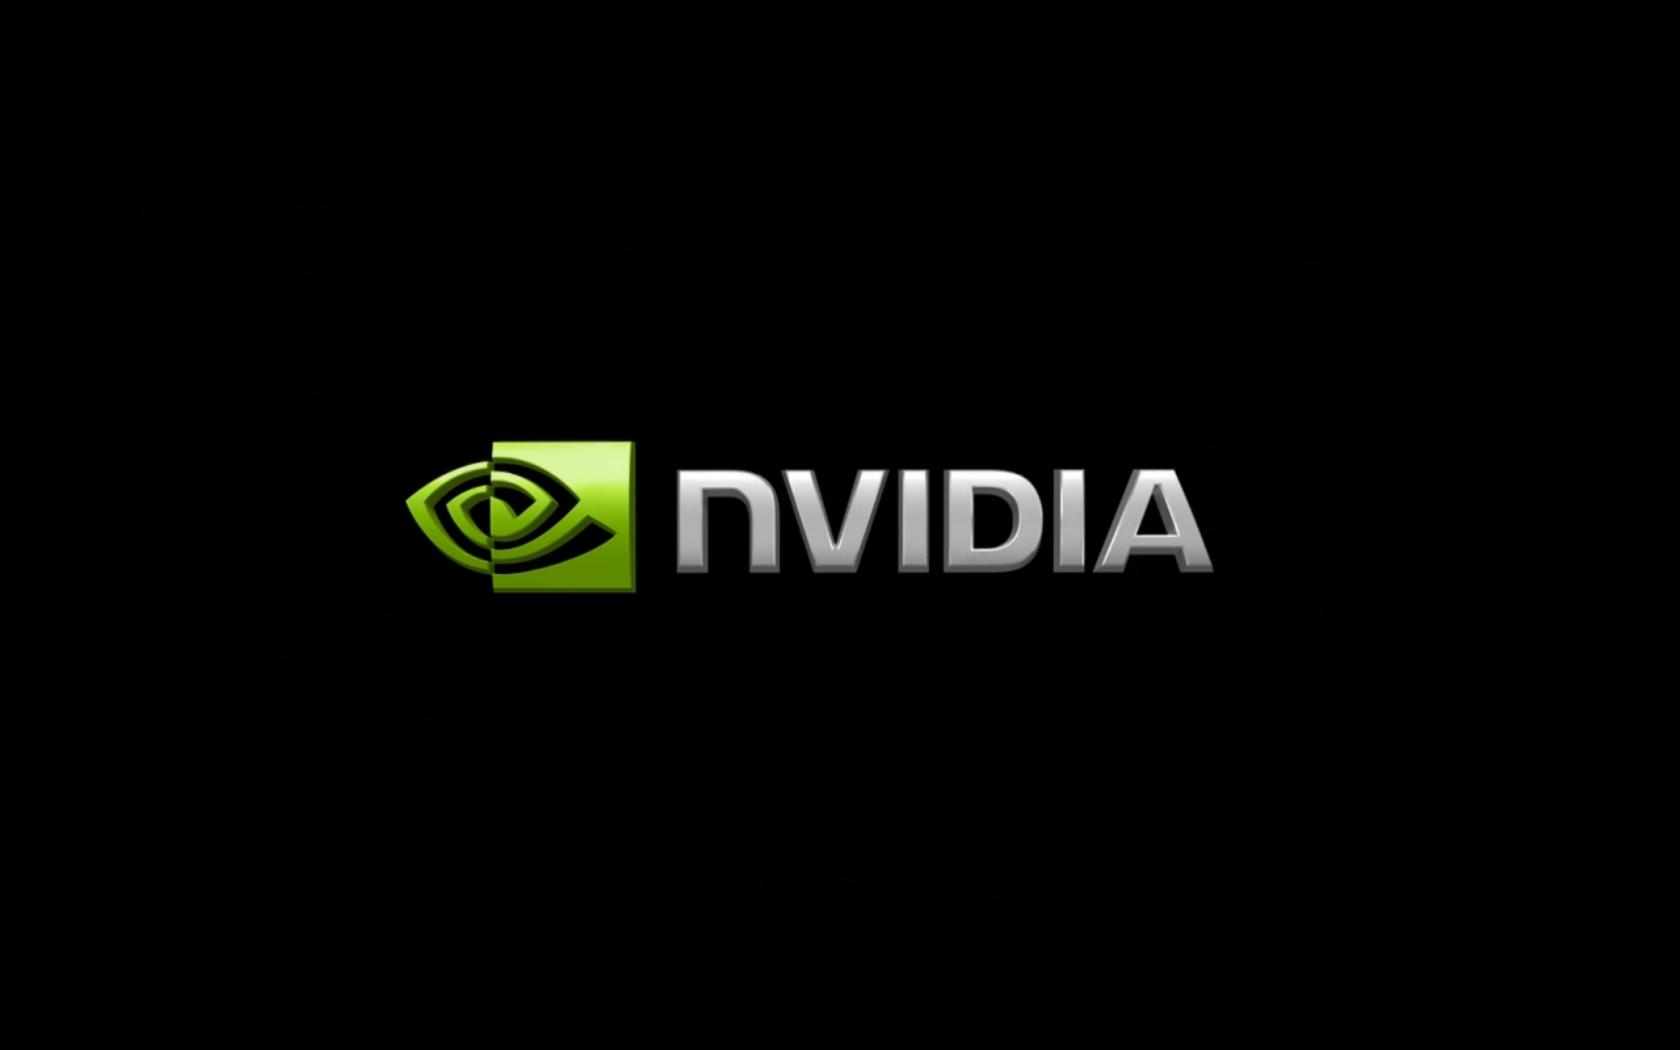 Nvidia’s “Core” Business